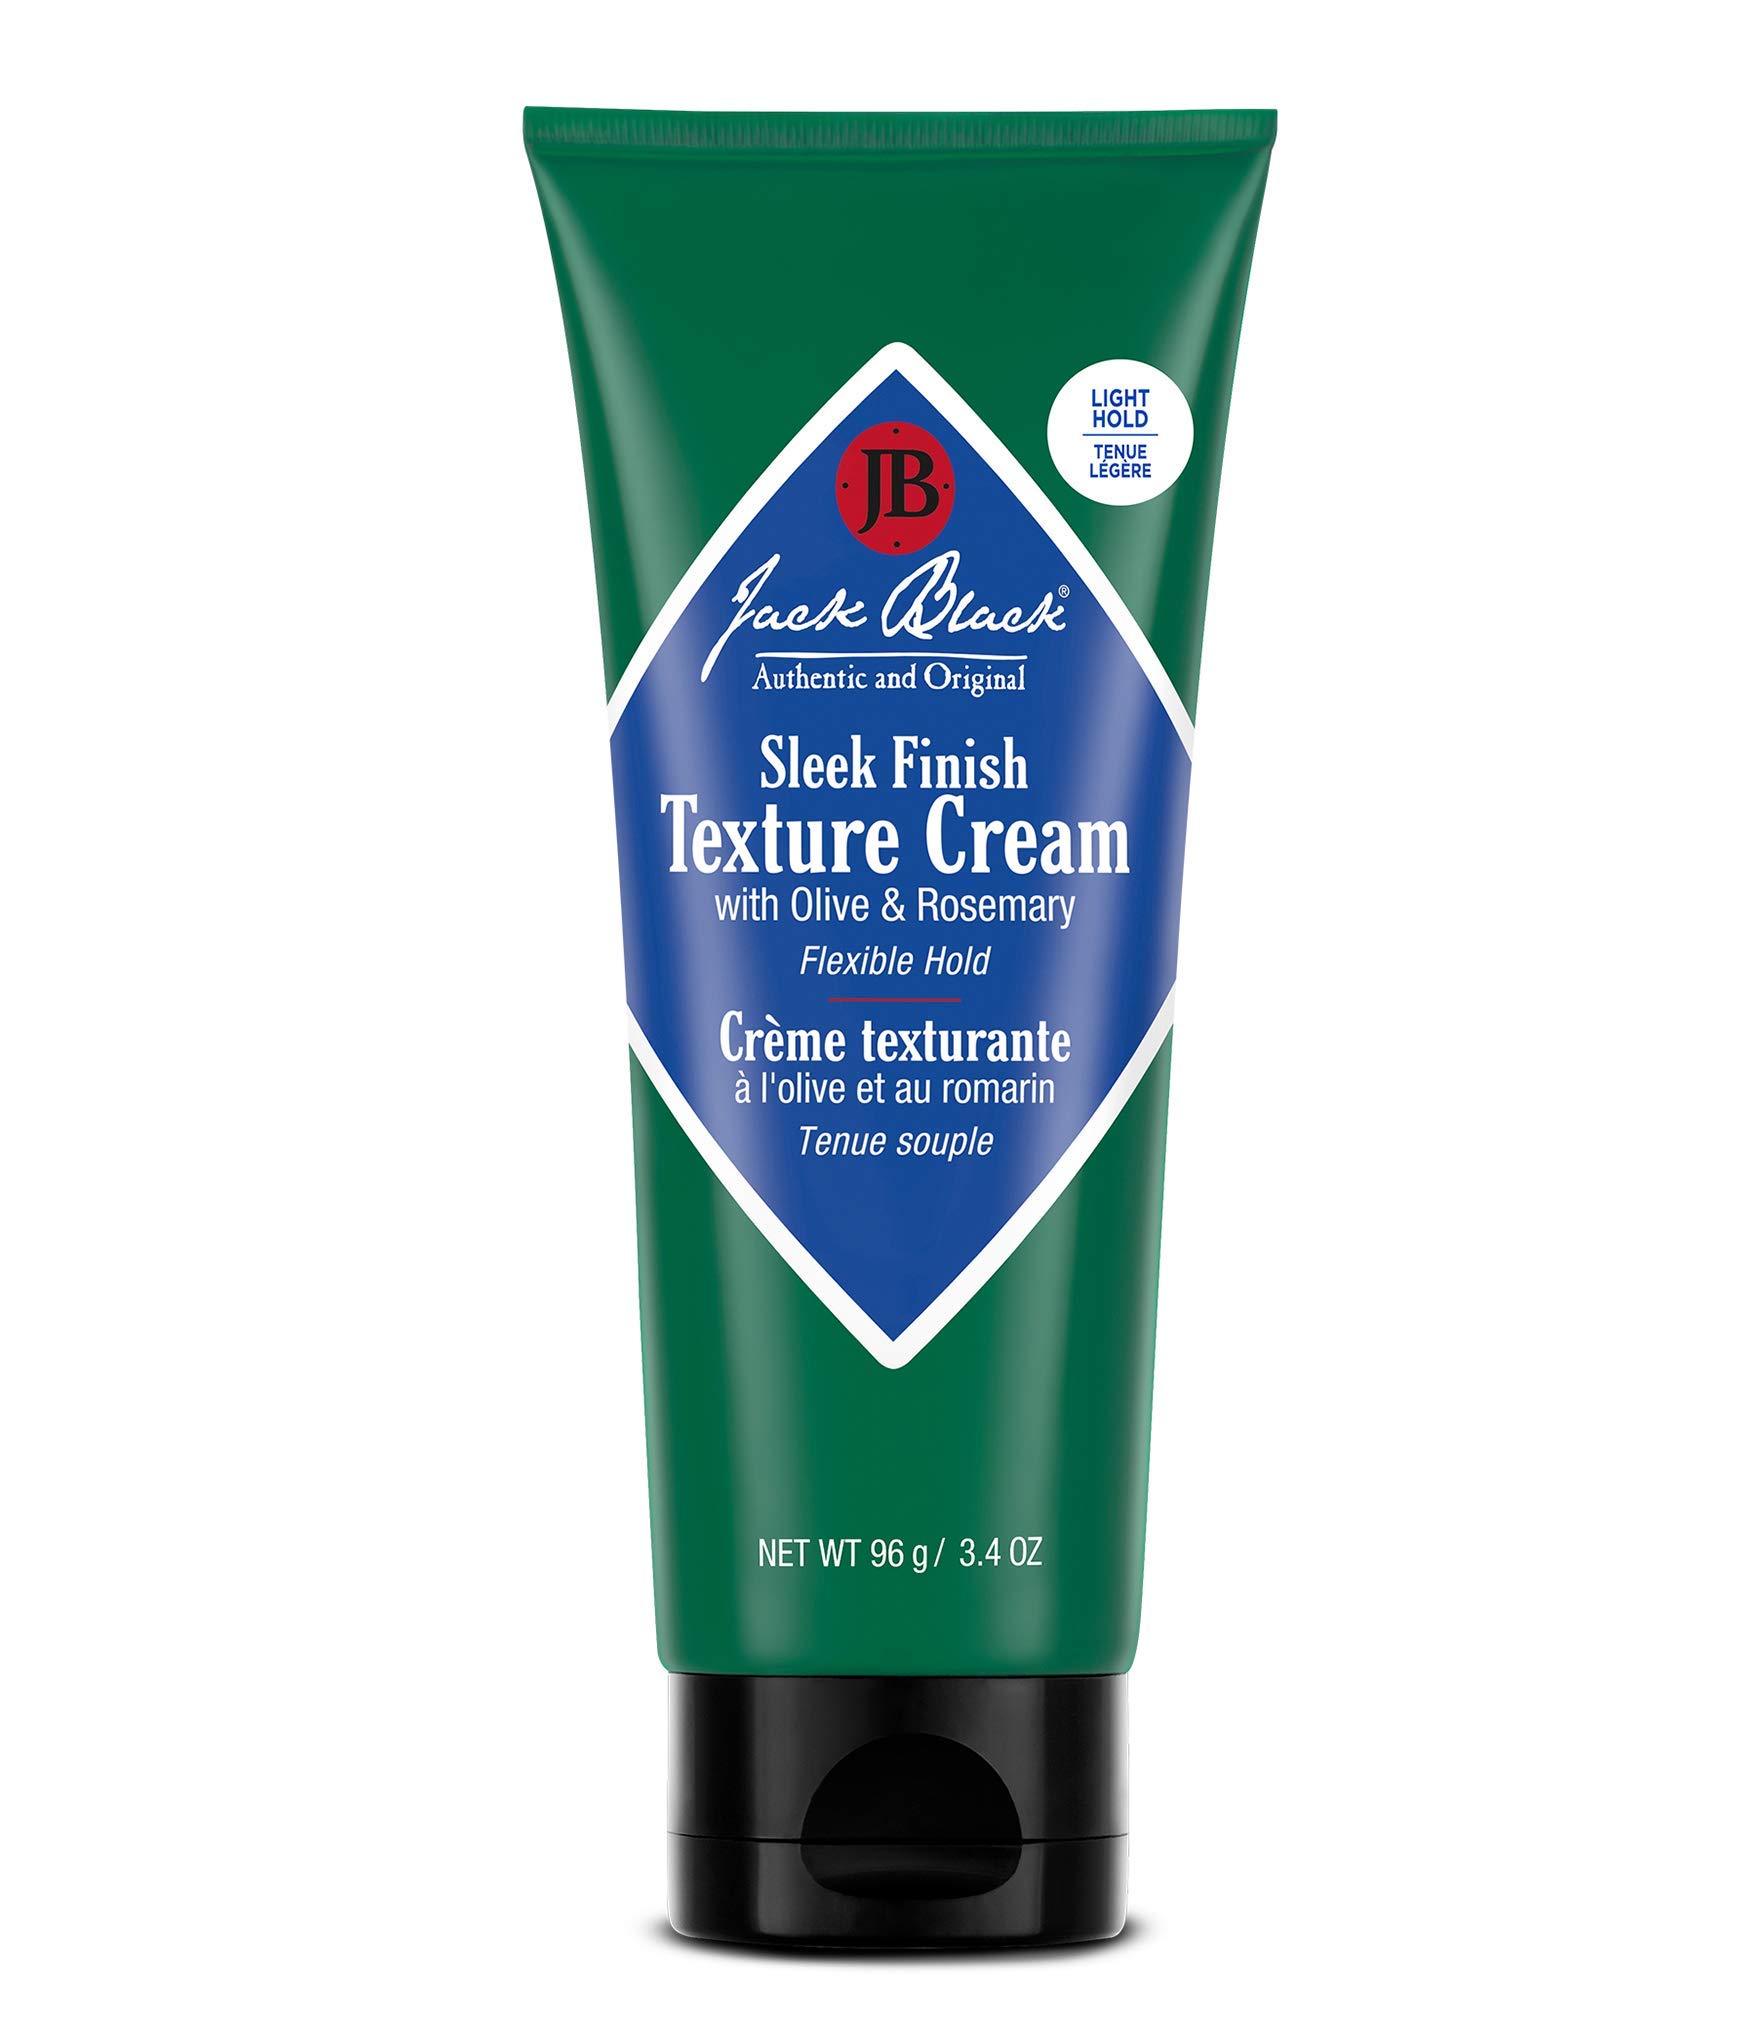 JACK BLACK - Sleek Finish Texture Cream - #1 Menâ€™s Skincare Brand - Superior Grooming Products - 3.4 fl. oz.